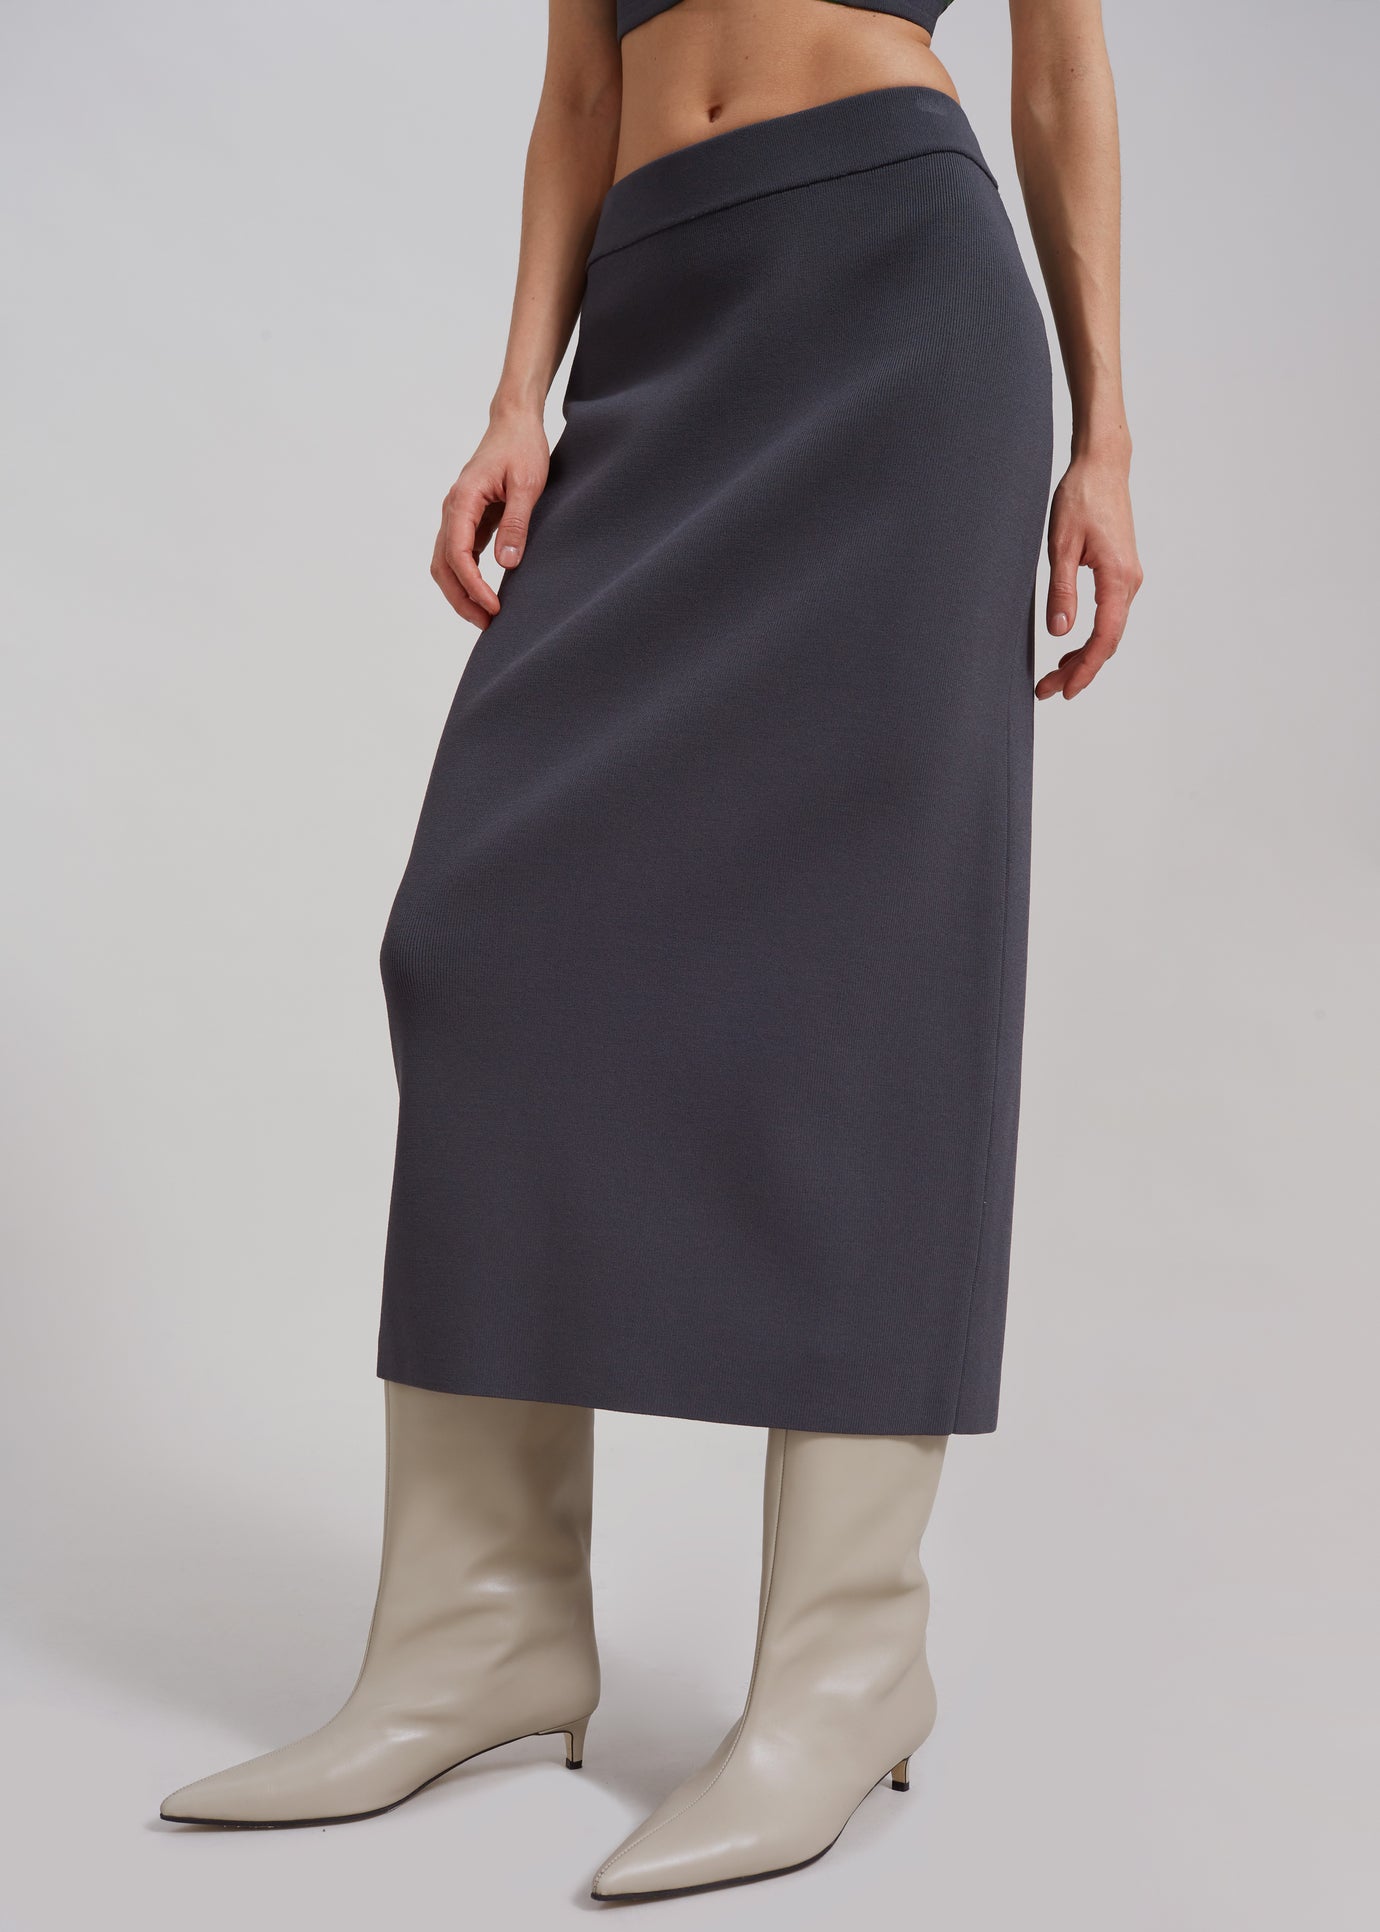 Solange Knit Pencil Skirt - Grey - 1